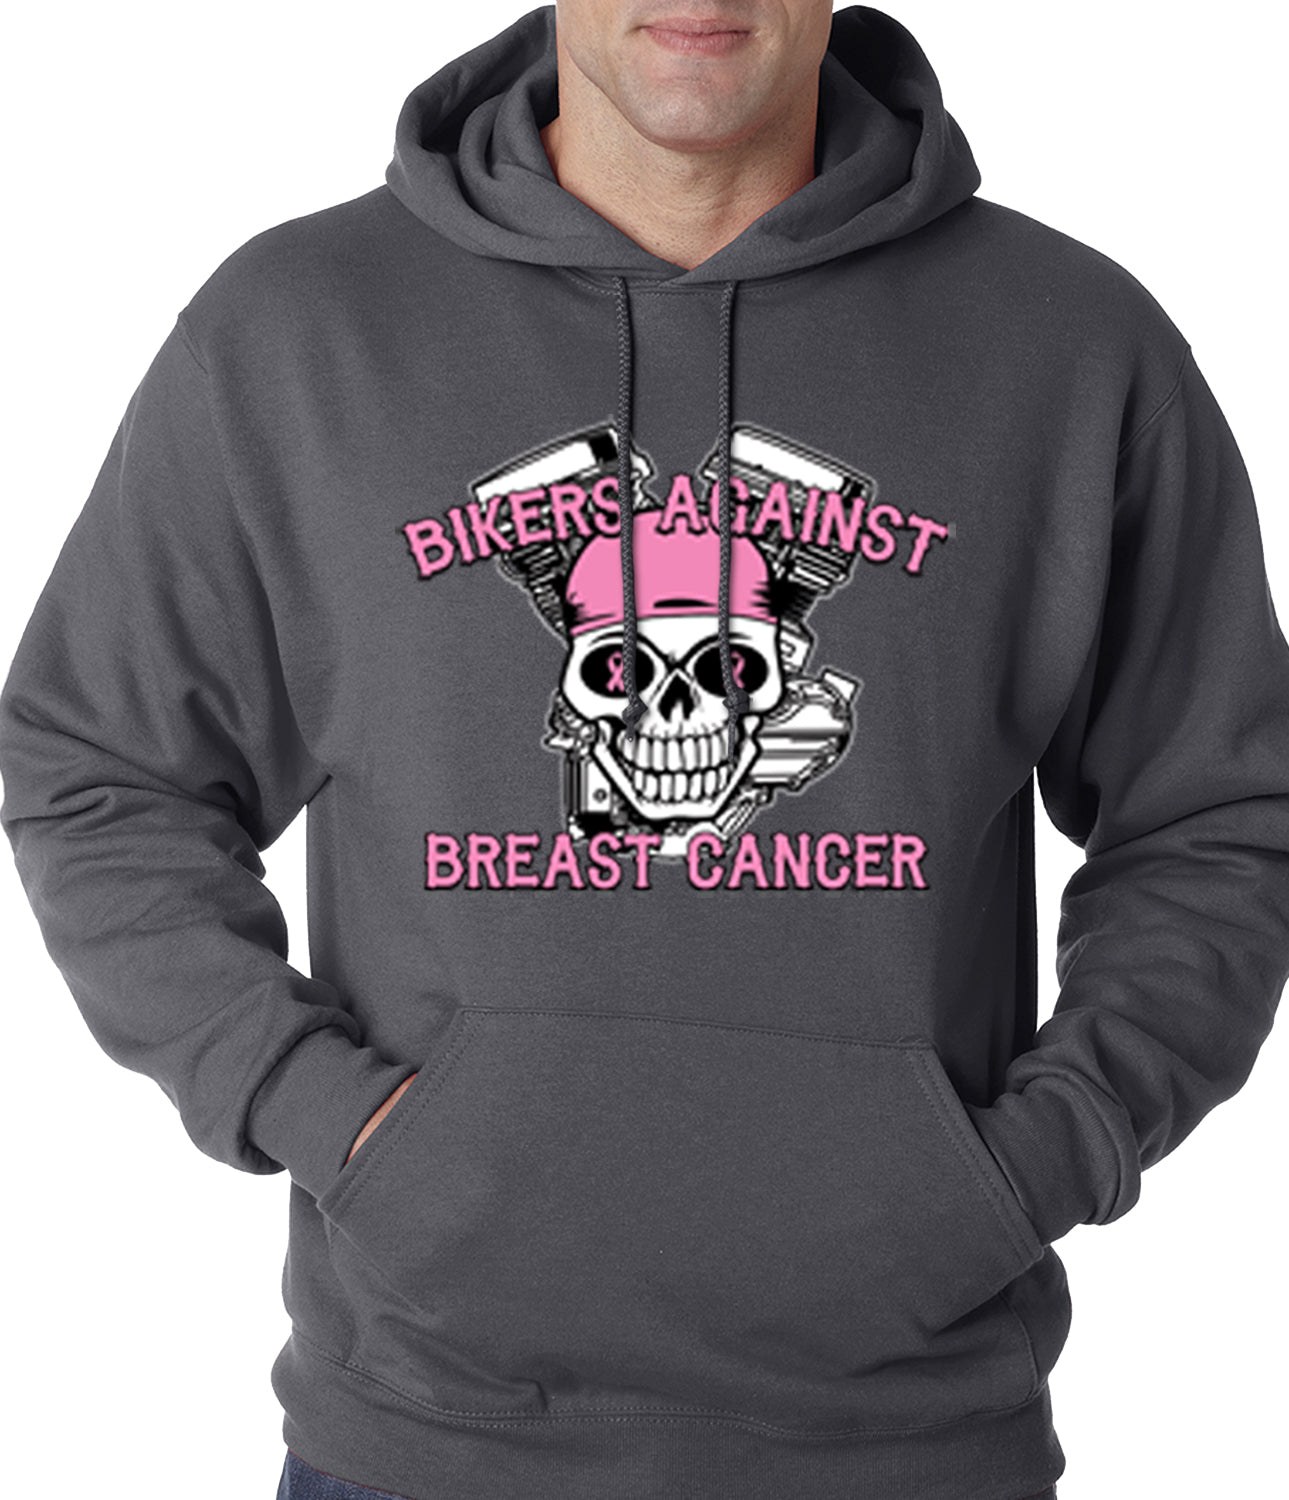 Bikers Against Breast Cancer Hoodie charcoal